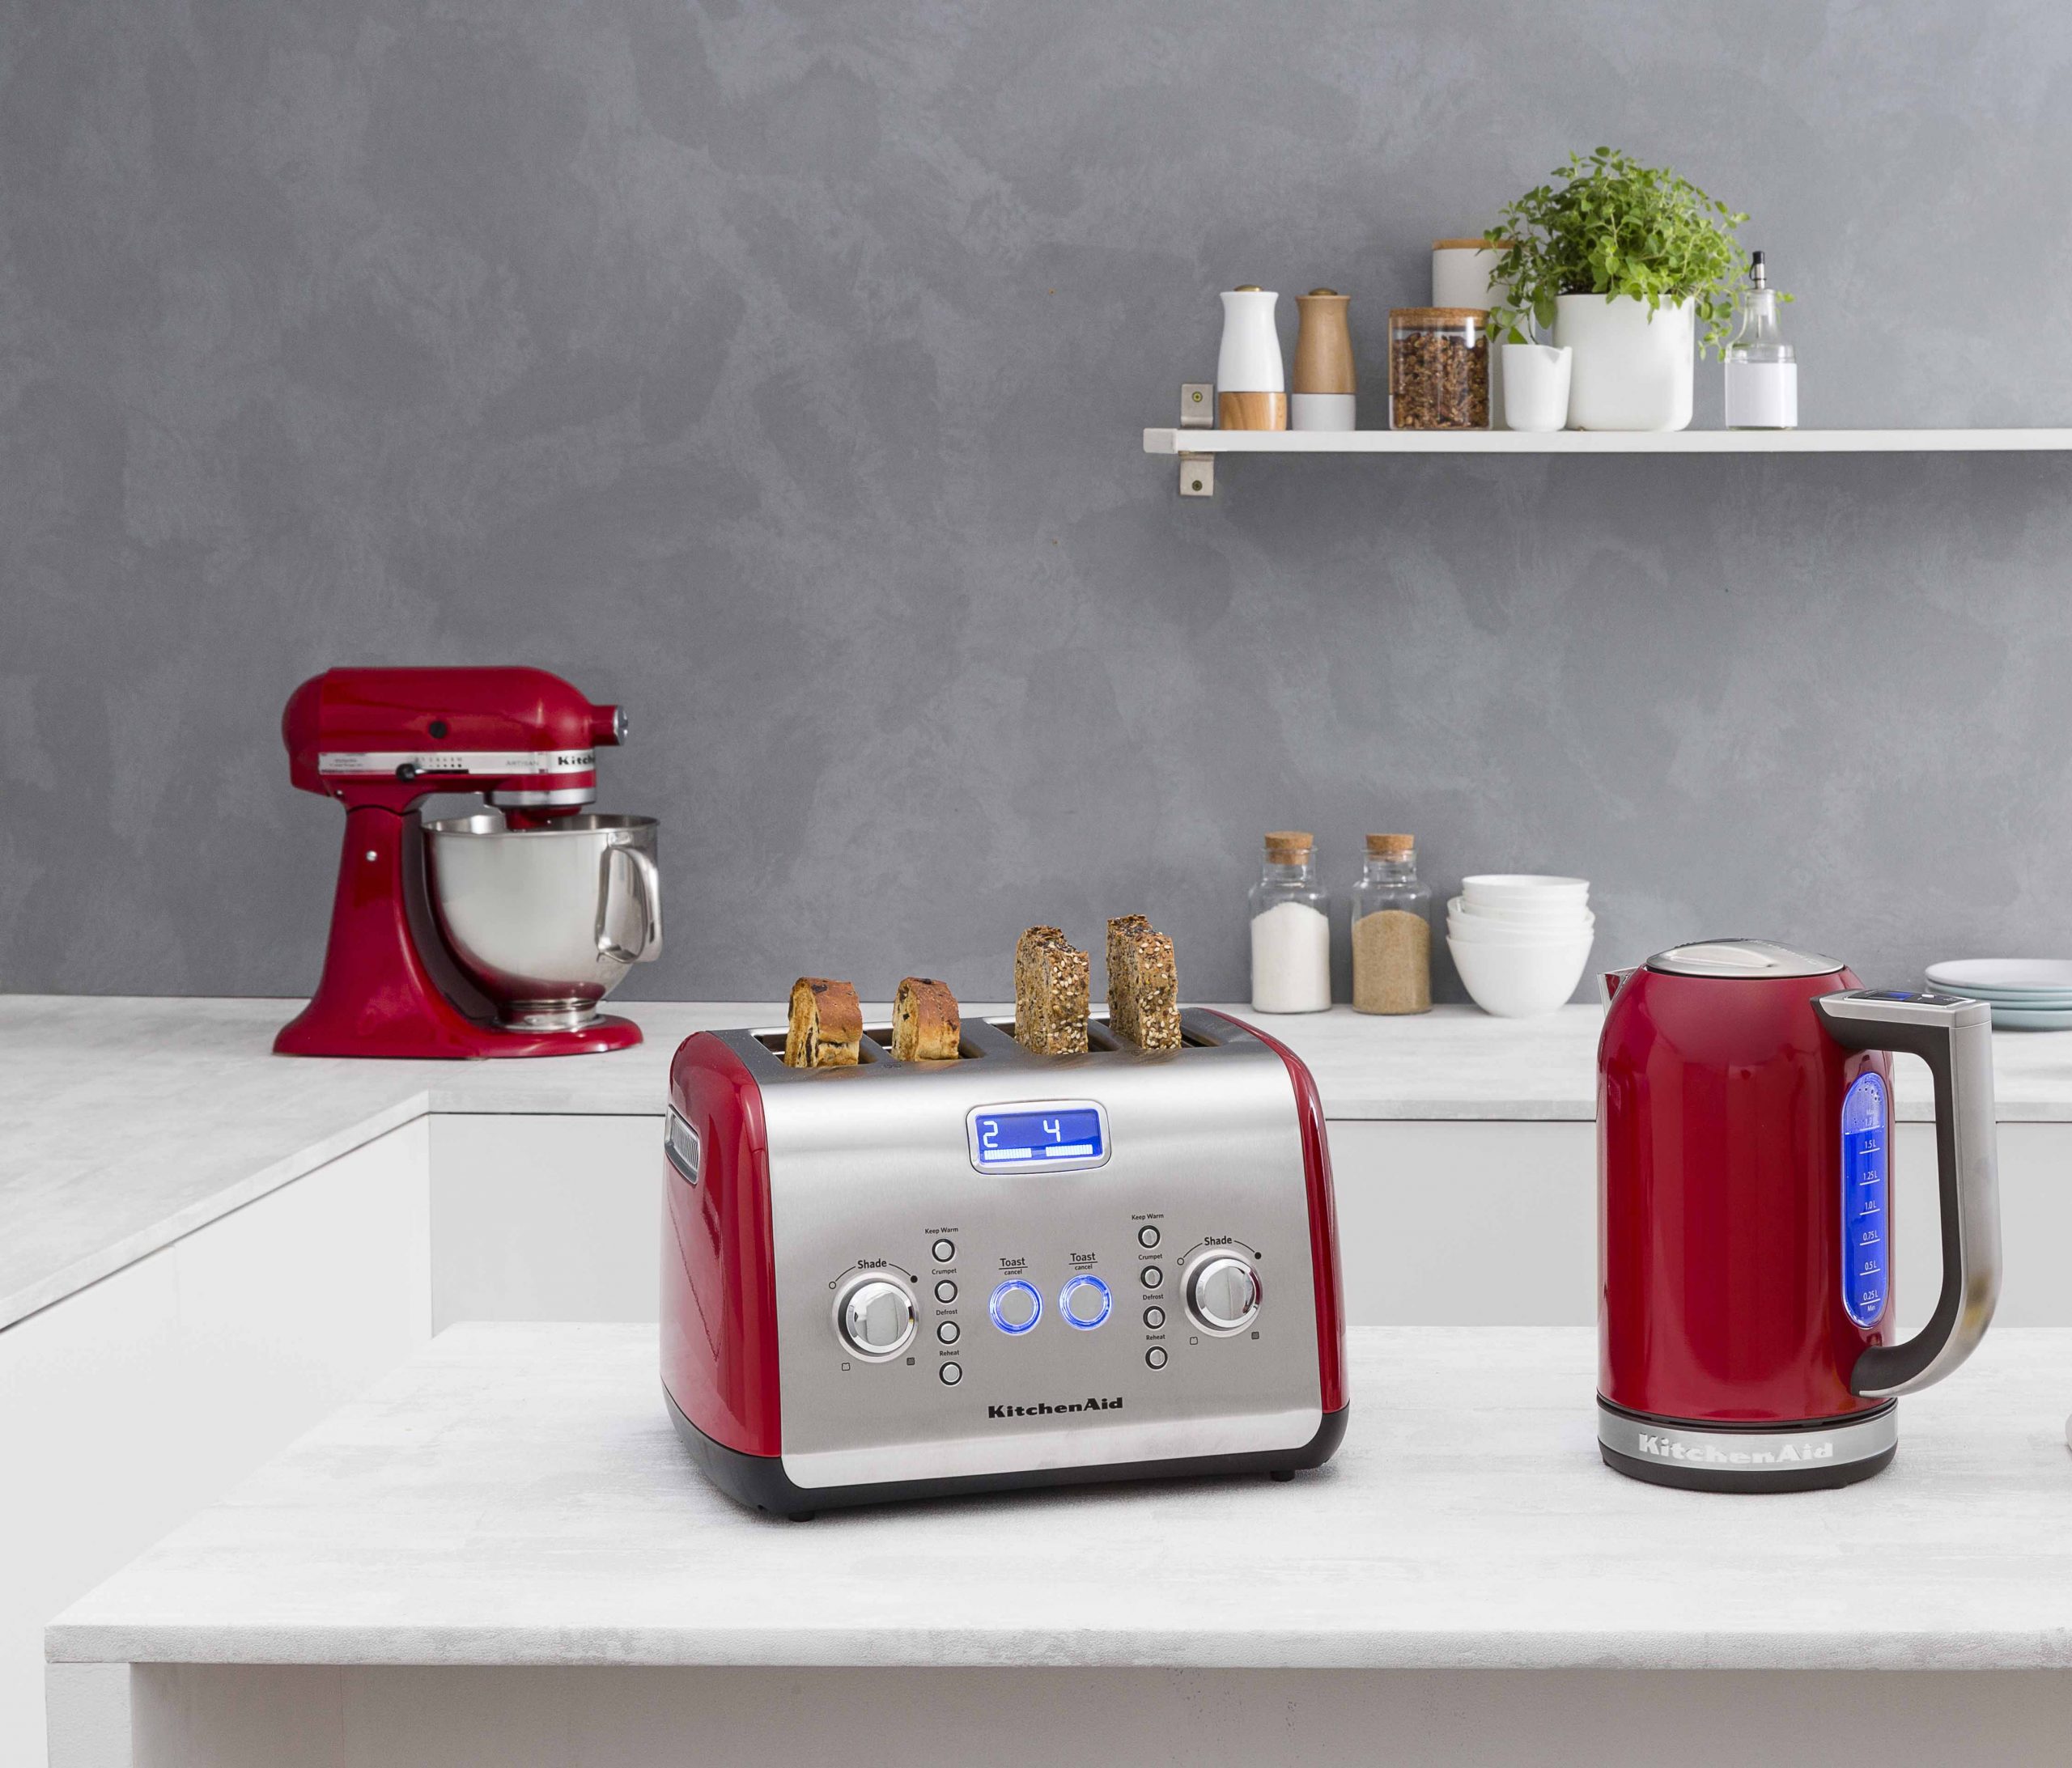 1day Gift 凯膳怡/KitchenAid 5AKMT423ER 4片红色烤面包机 多功能多士炉吐司加热机7种烘烤程度 机身一体成型 液晶显示屏